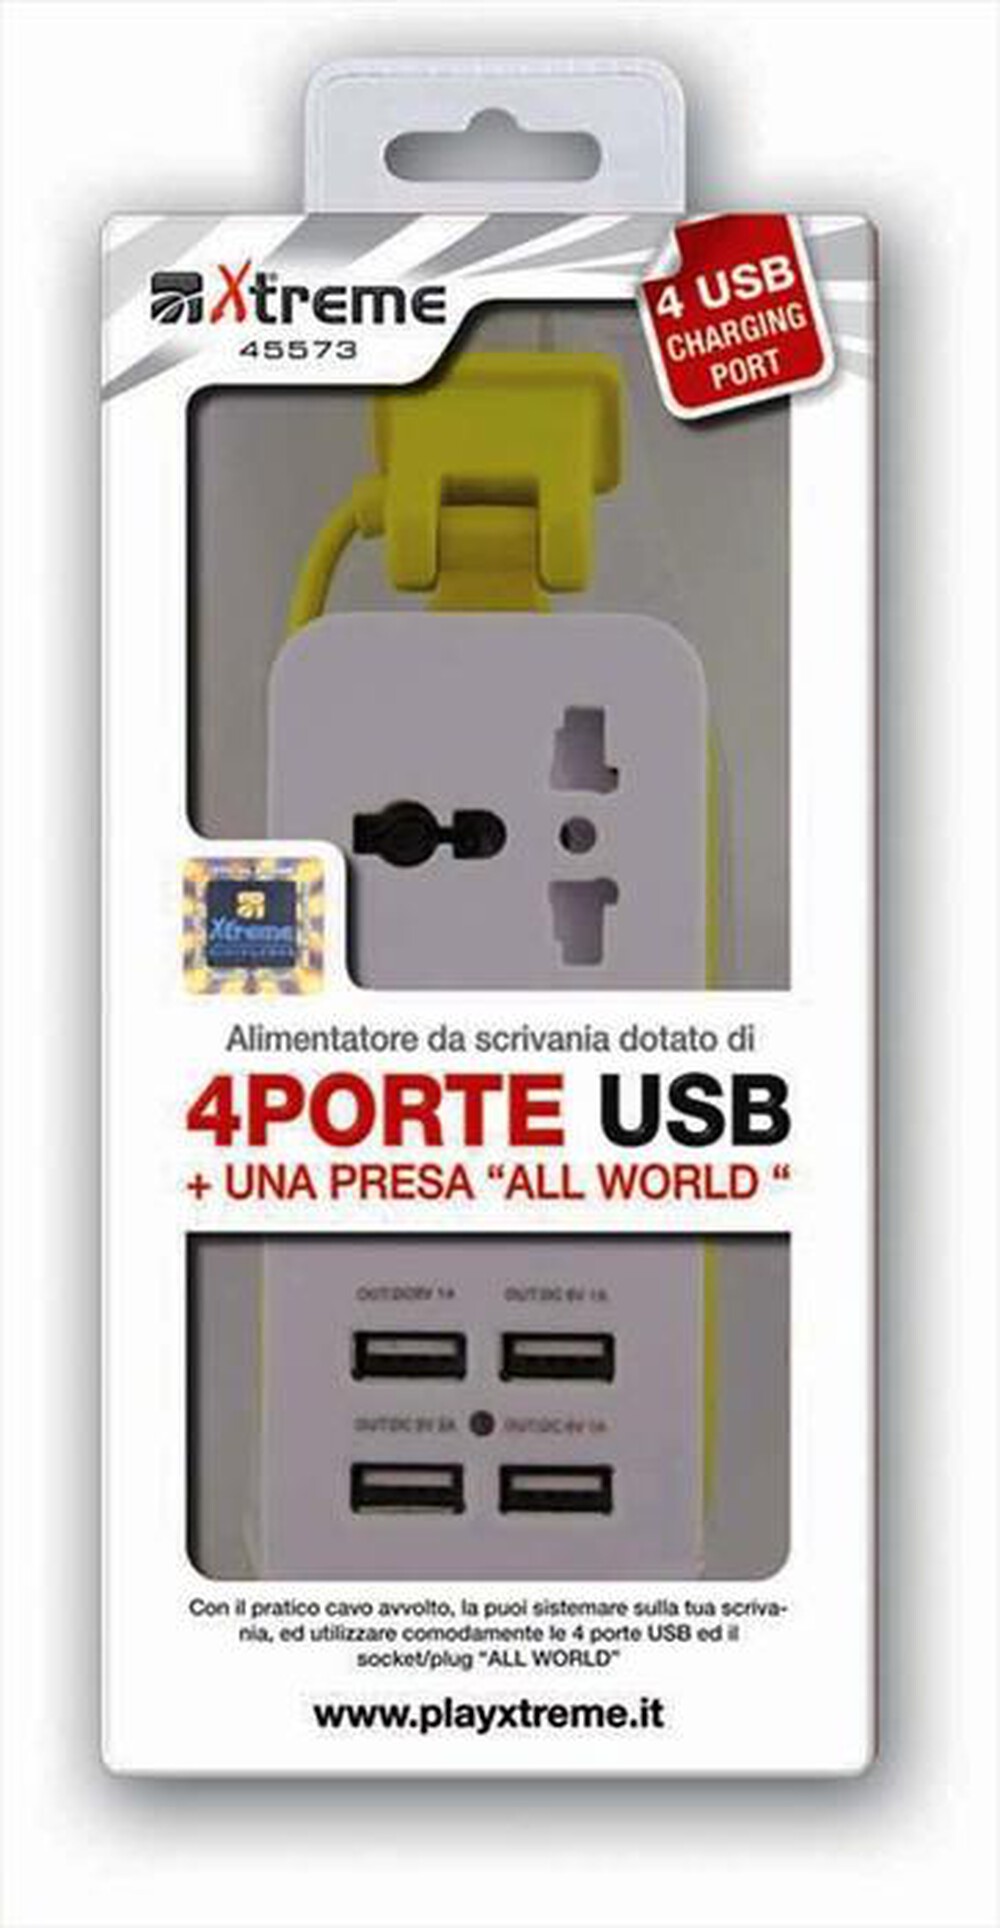 "XTREME - 45573 - Alimentatore multipresa 4 porte USB - "